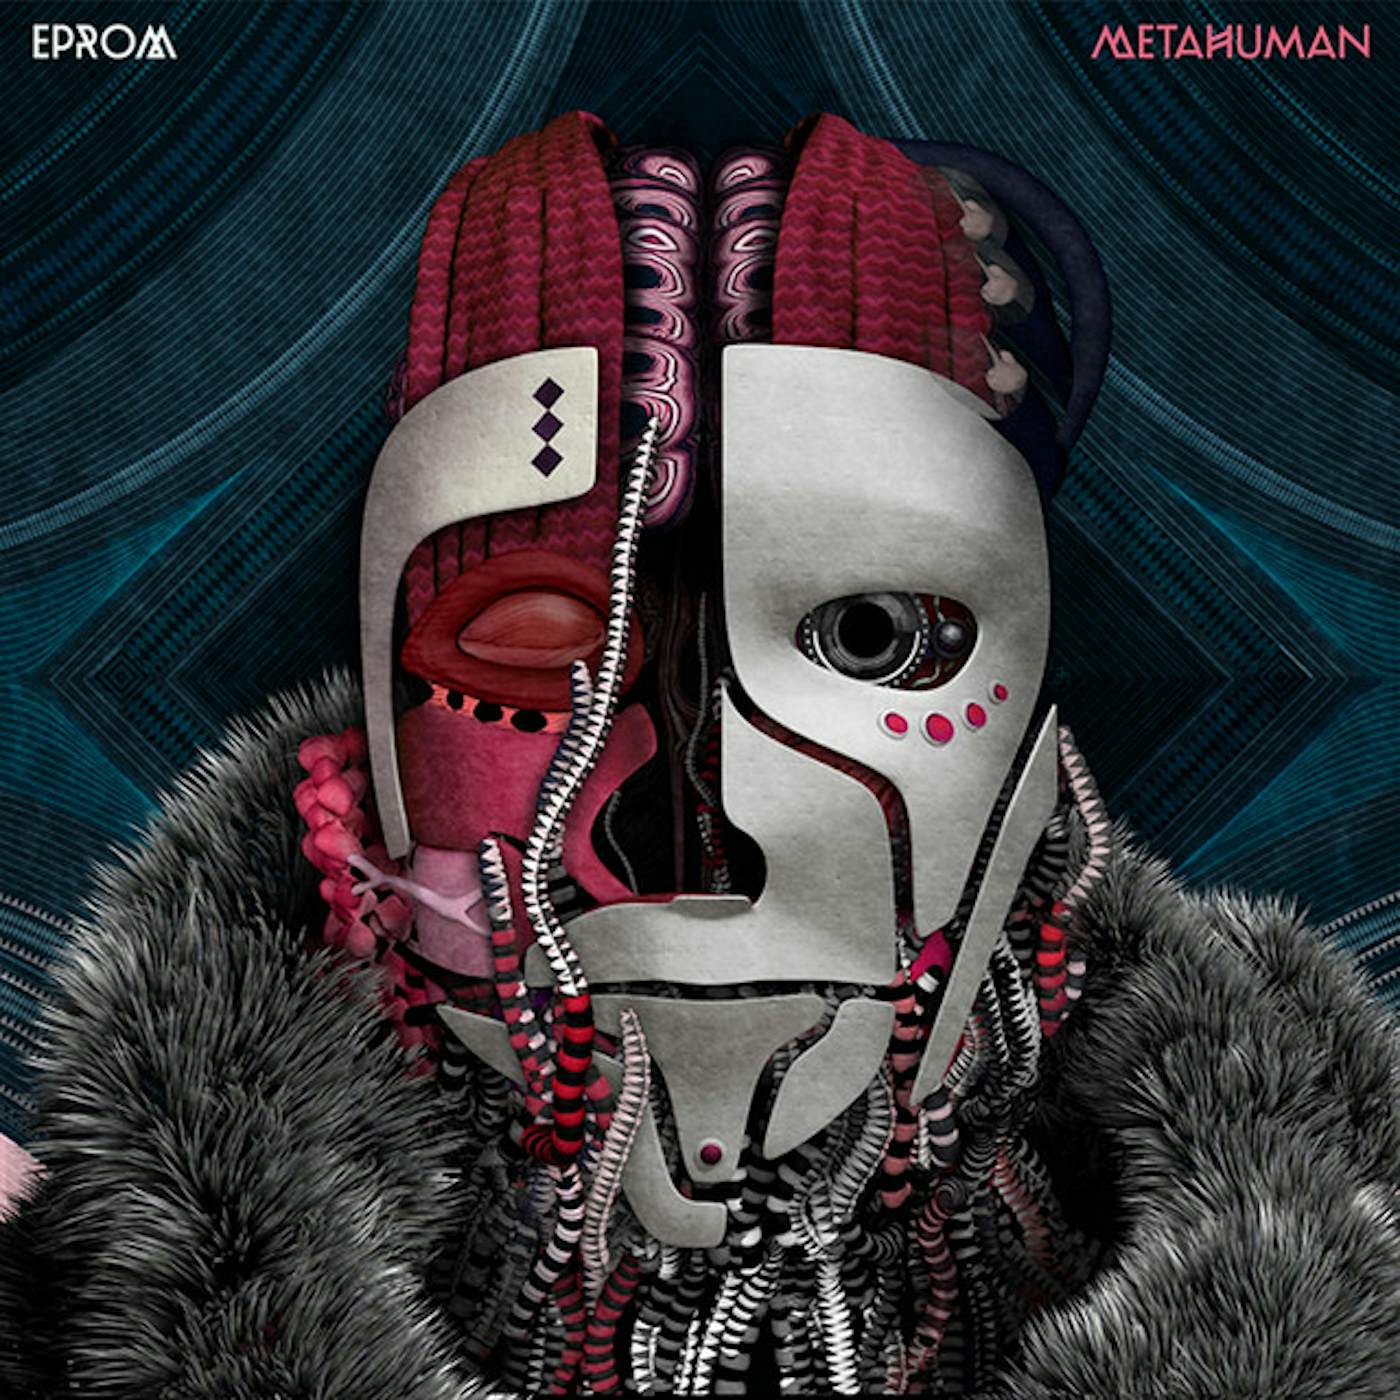 Eprom Metahuman Vinyl Record